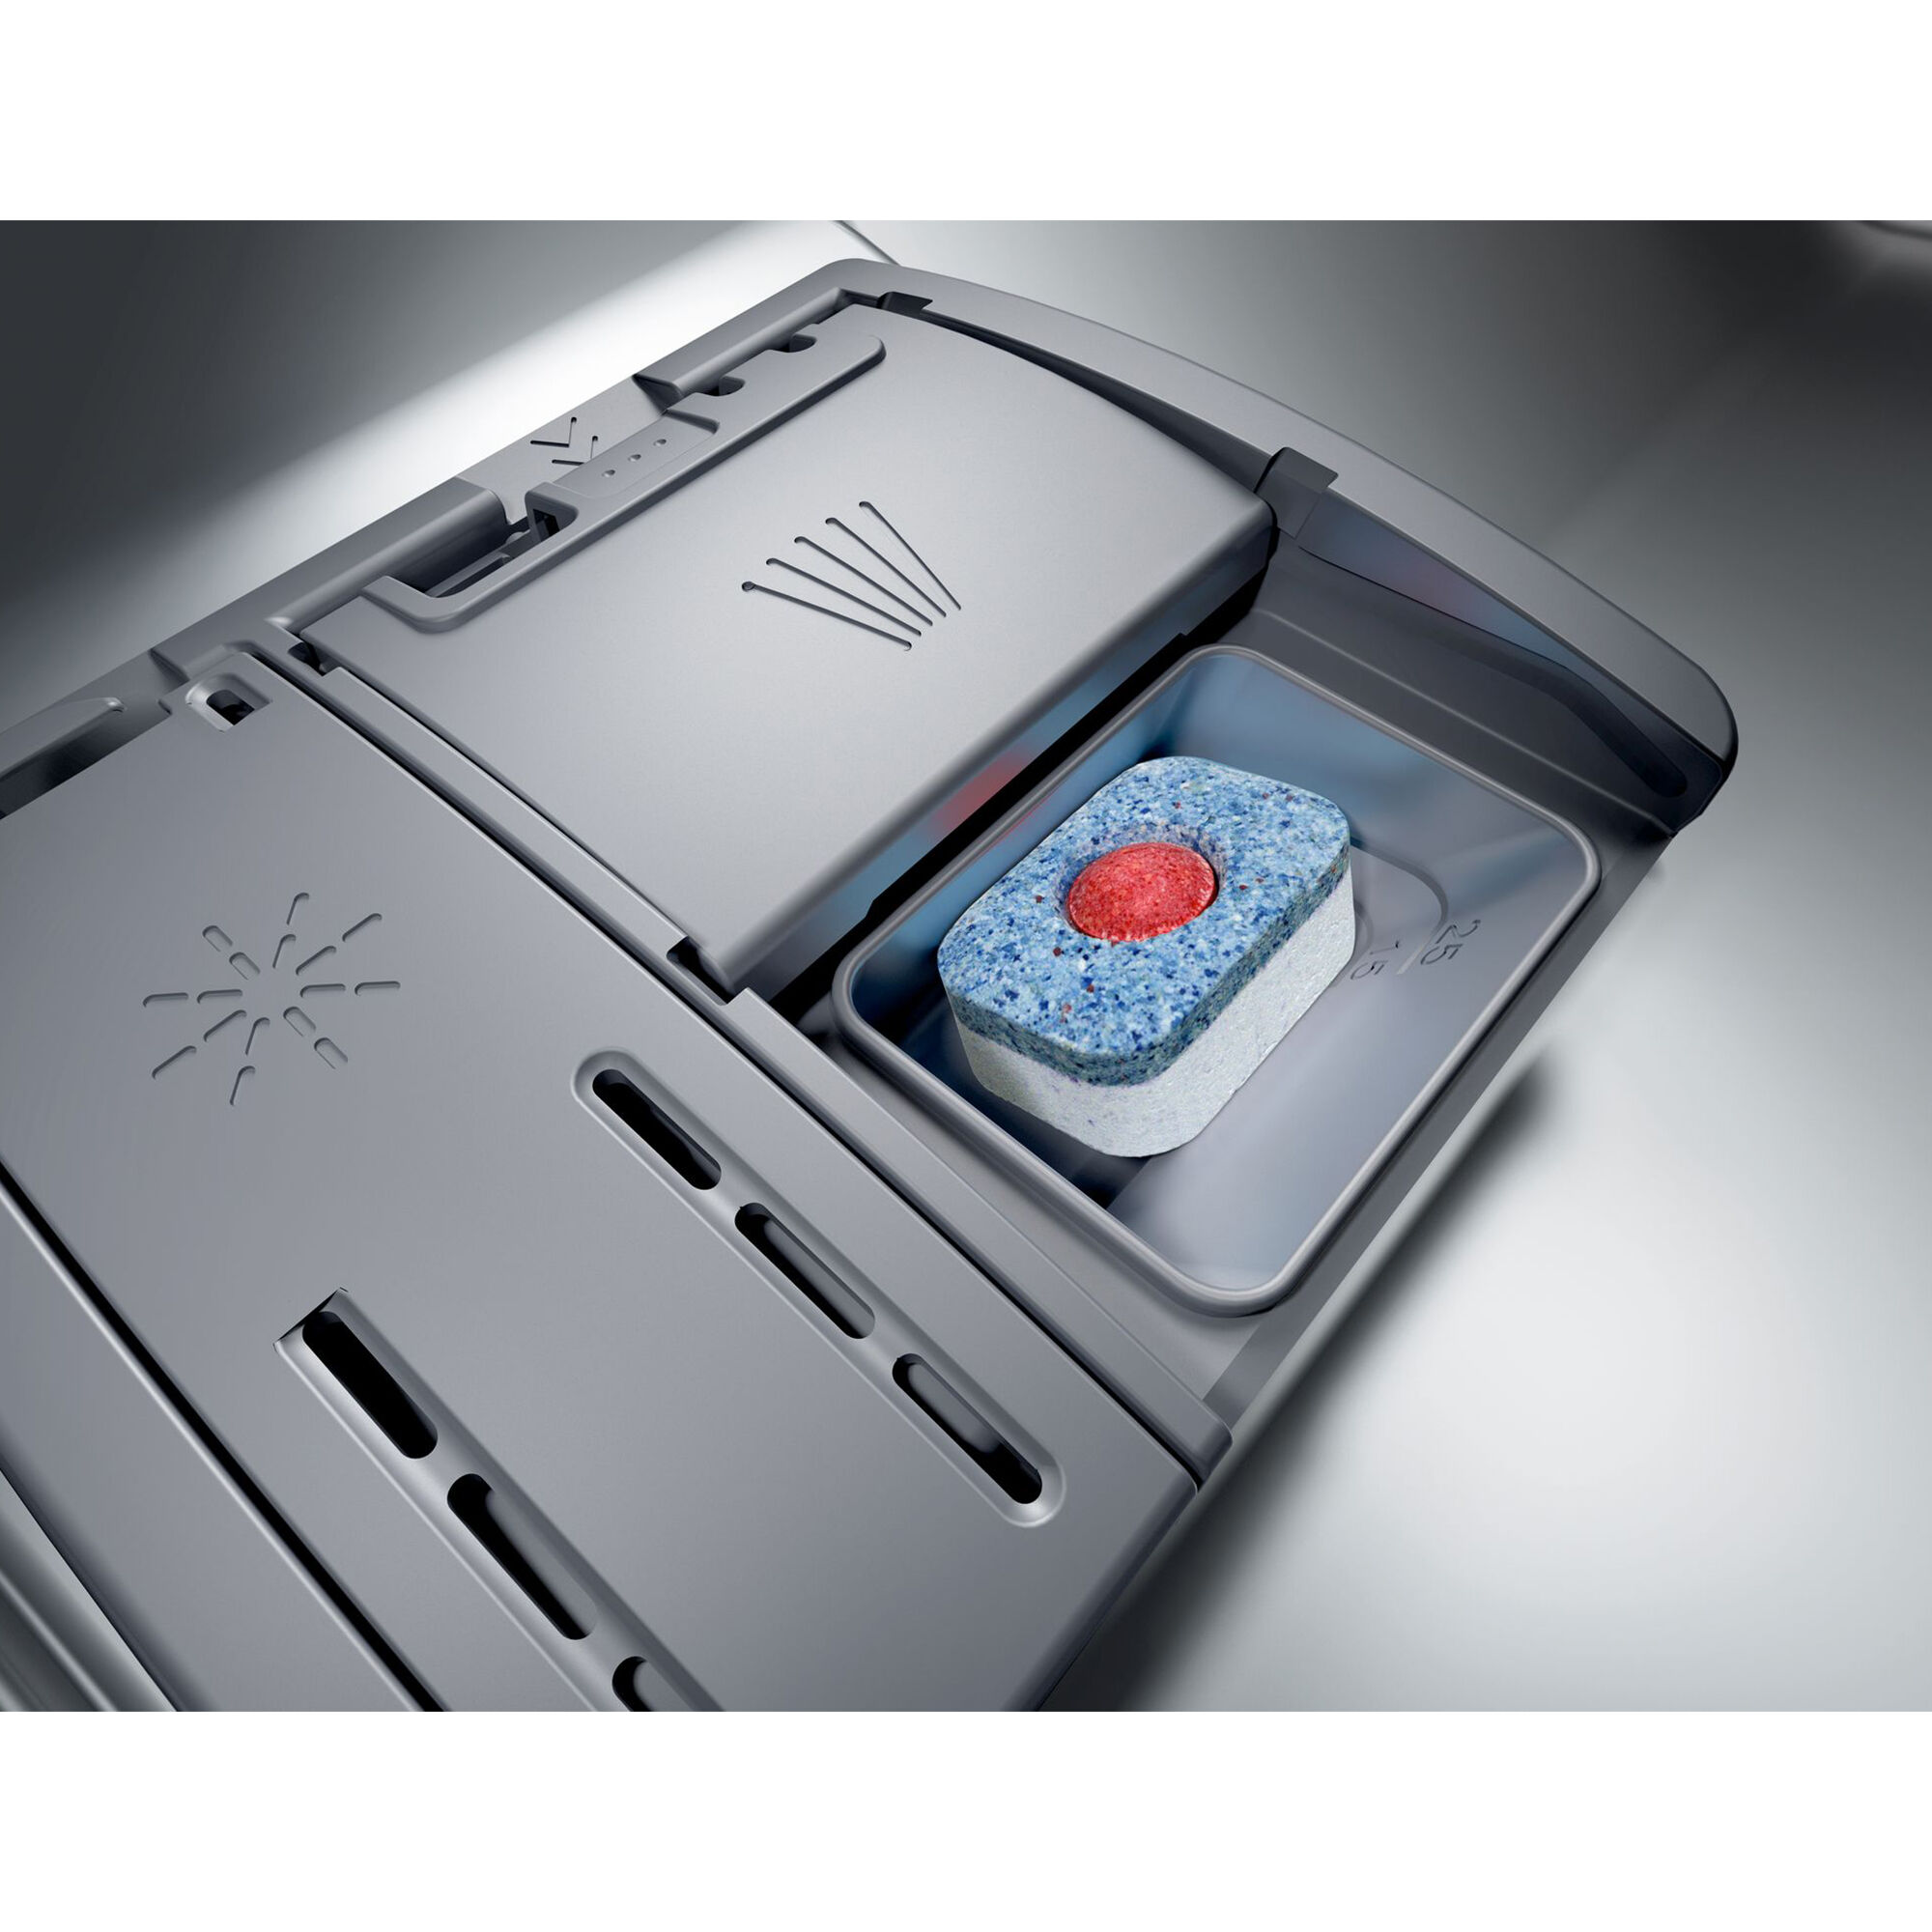 Bosch 100 Series Premium 24 in. Smart Built-In Dishwasher with Top 